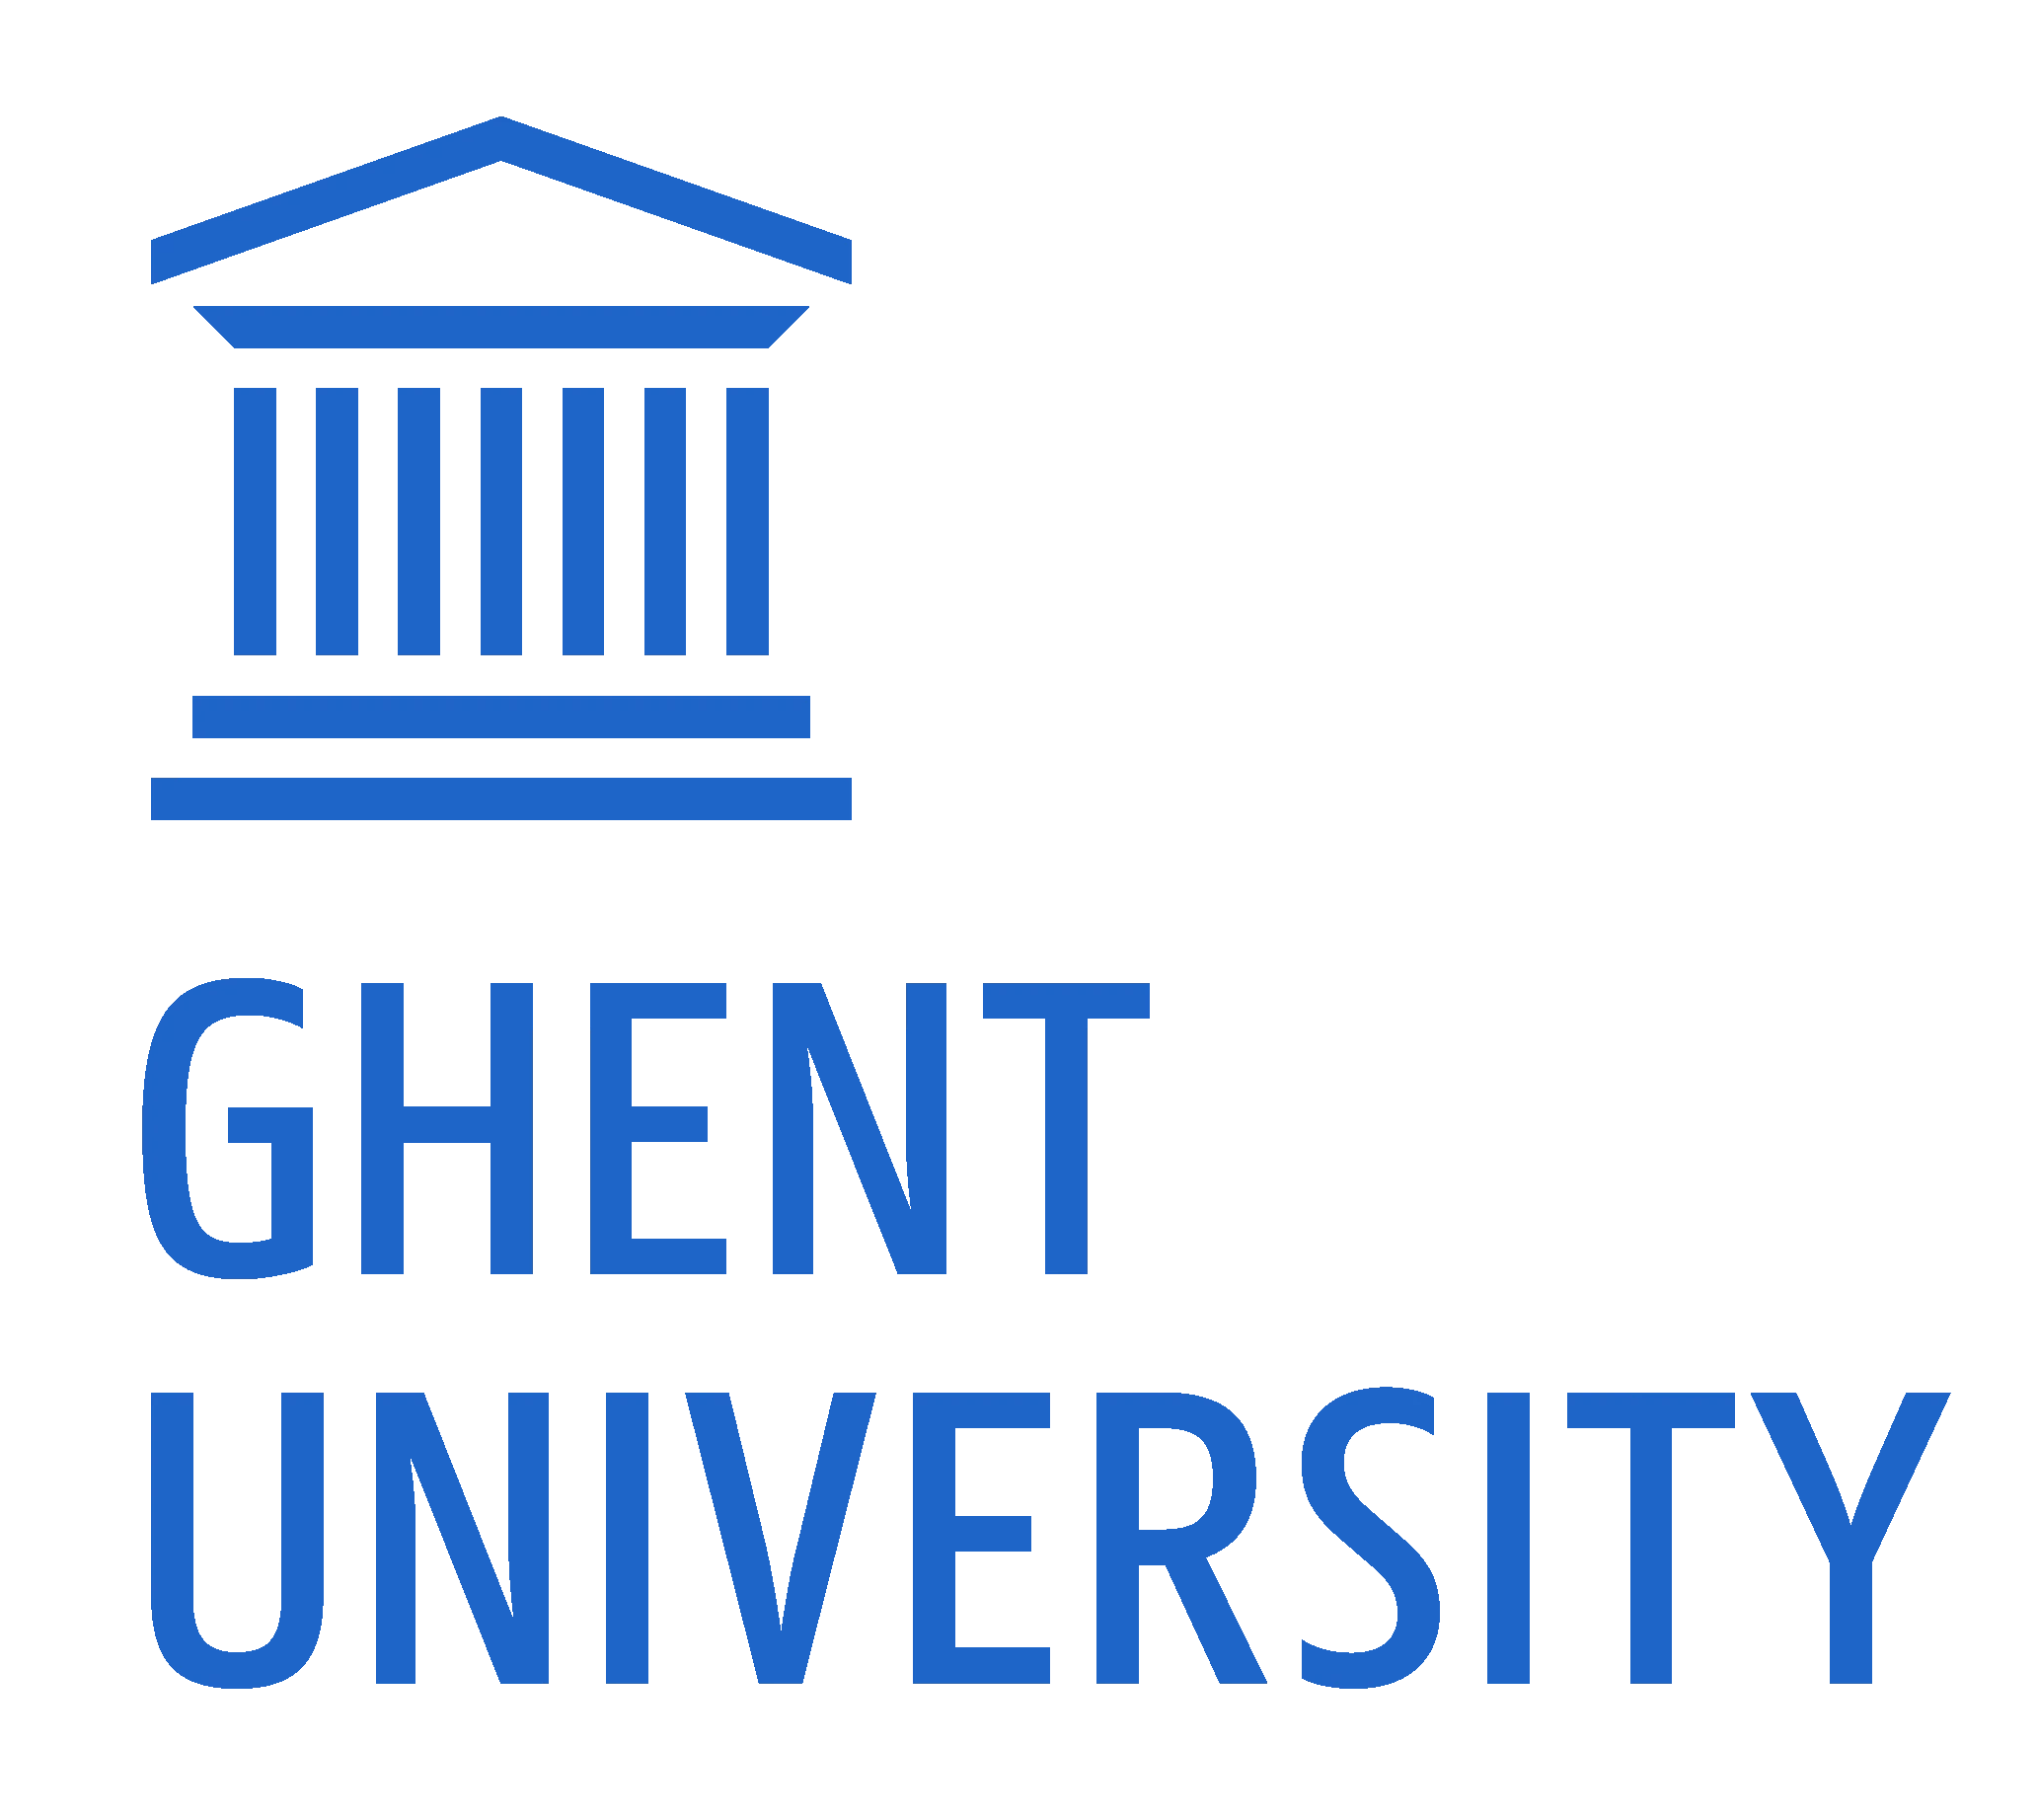 University of Gent